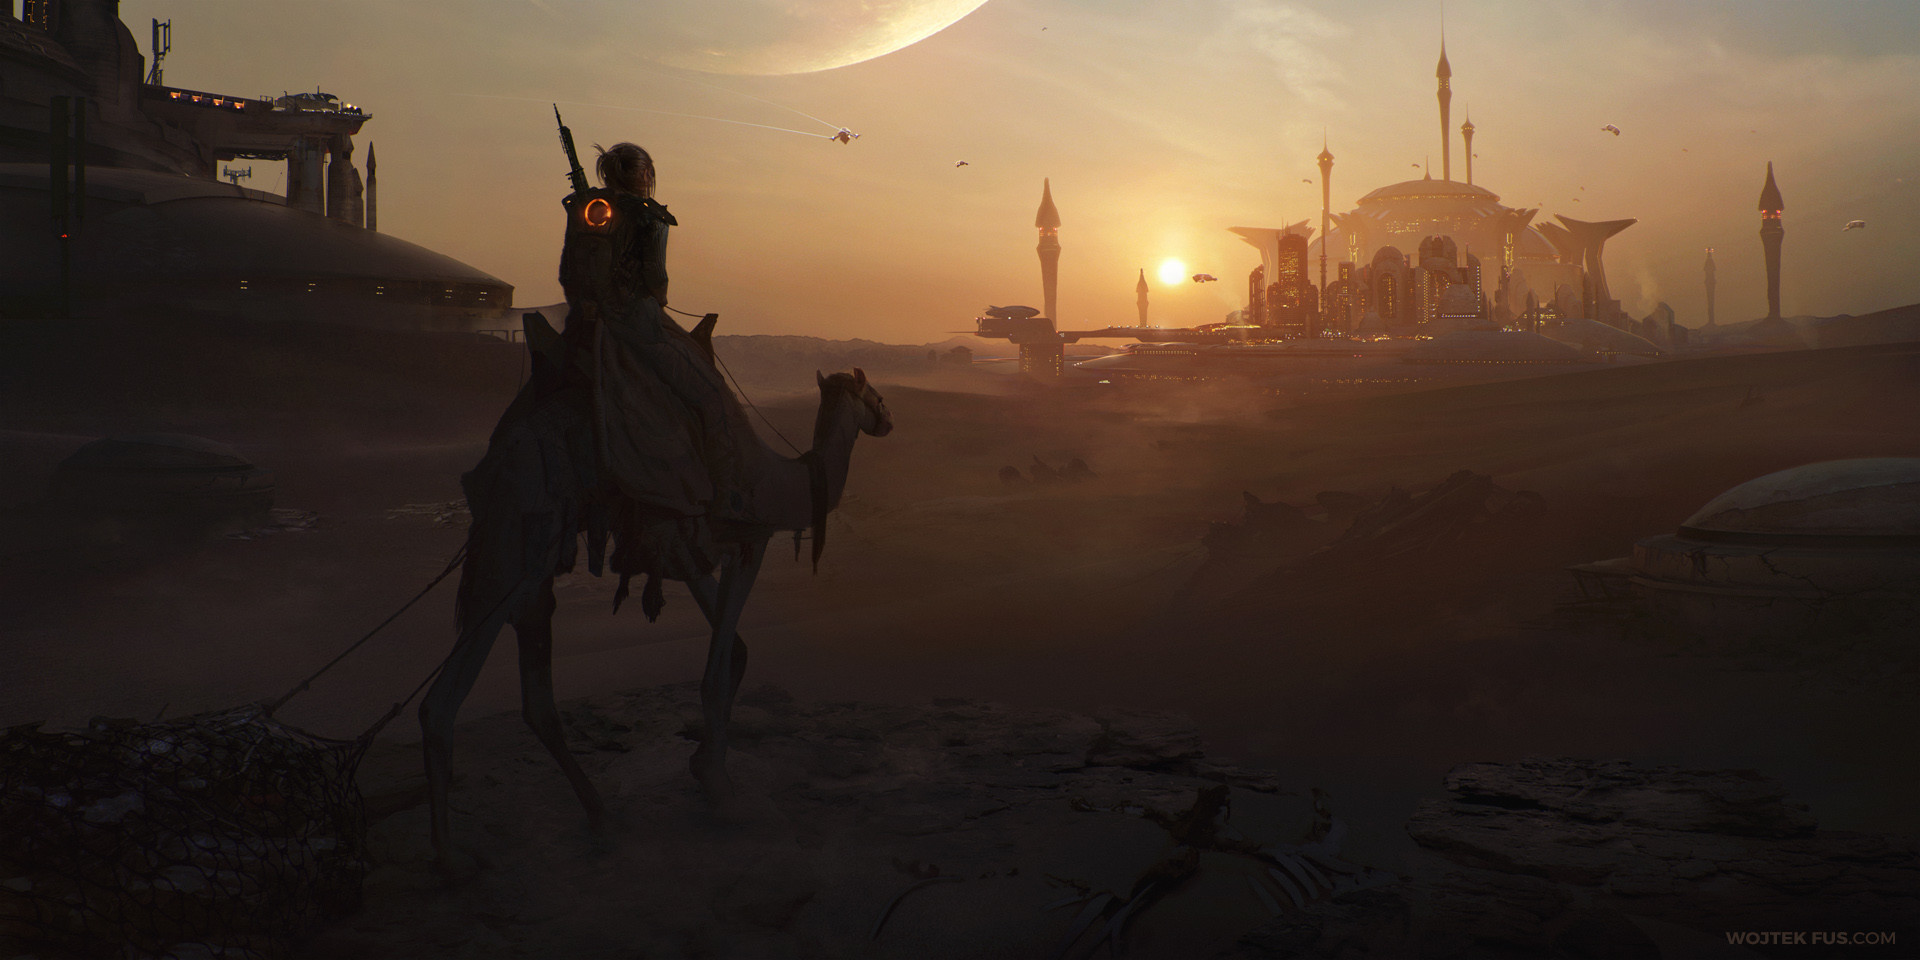 Wojtek Fus Drawing Science Fiction Camels Animals Desert Sun Planet City Flying Weapon Pilgrims 1920x960